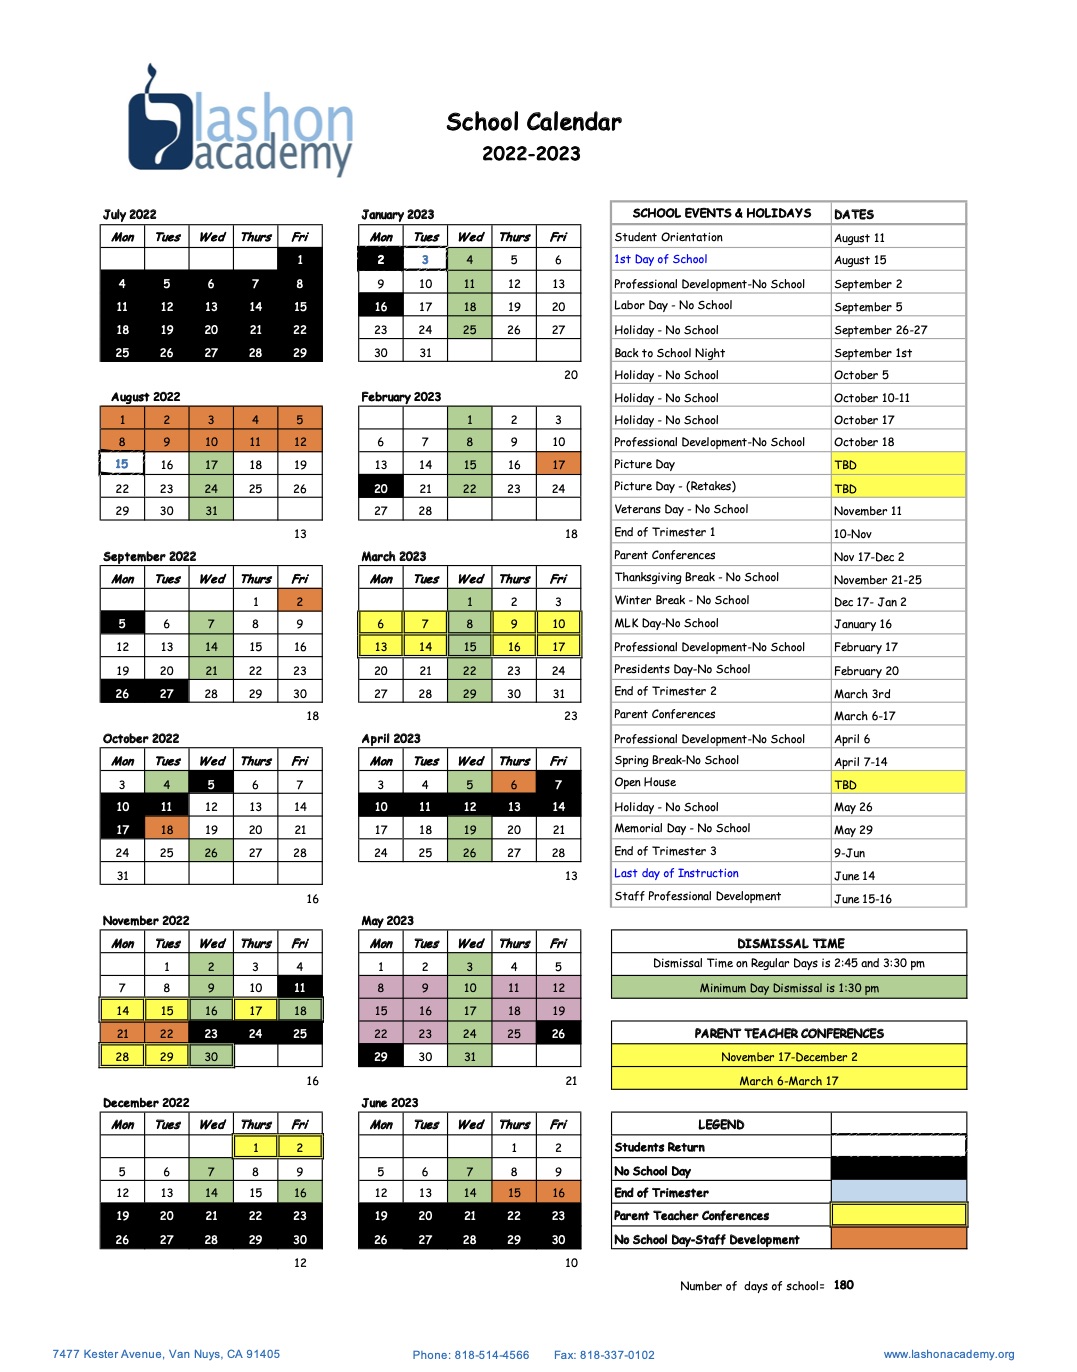 School Calendar (City) Lashon Academy